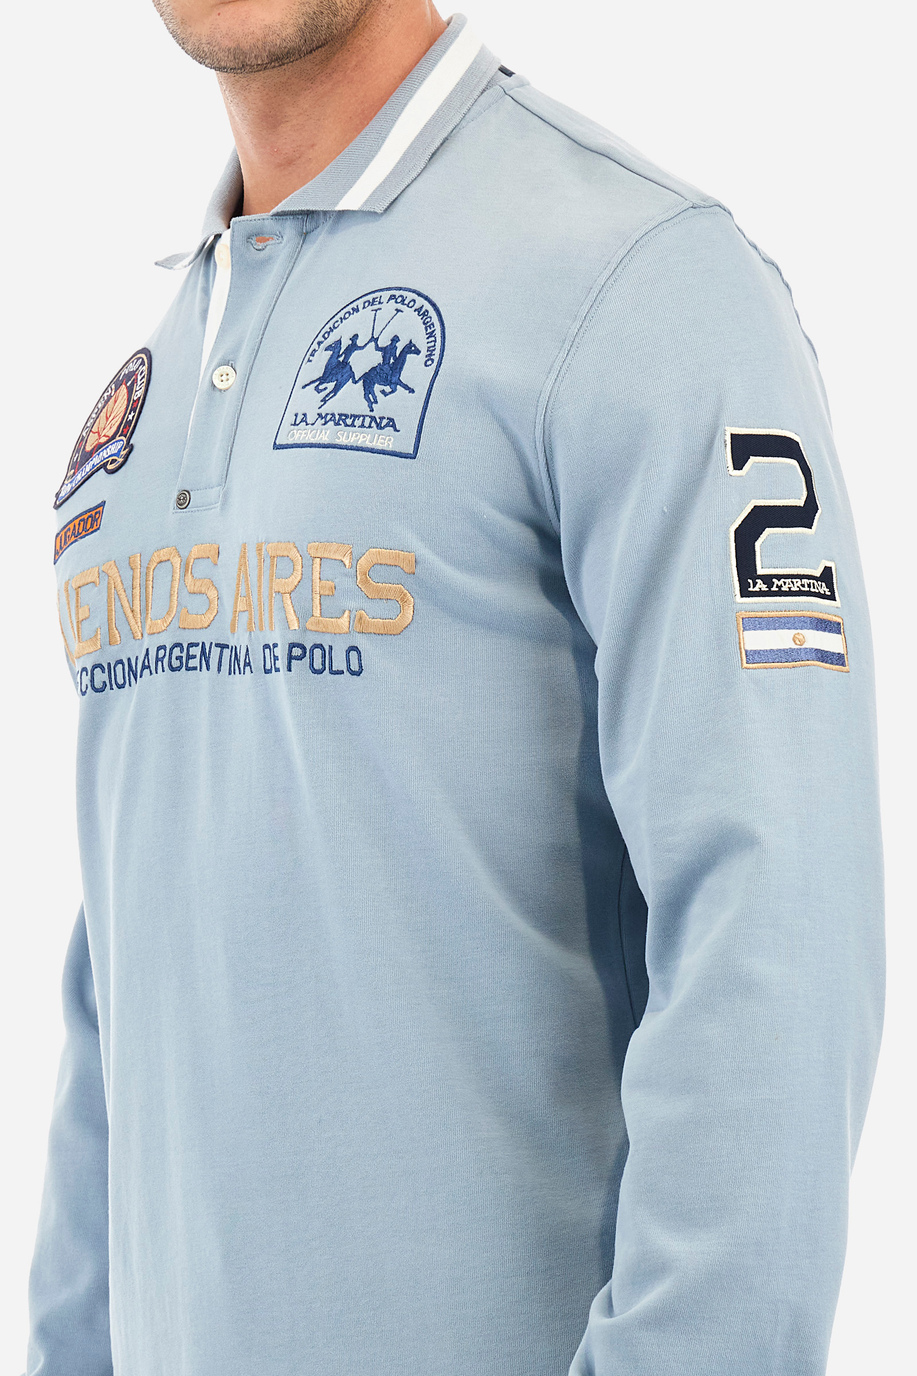 Polo homme coupe classique - Wilkinson - Polo Shirts | La Martina - Official Online Shop